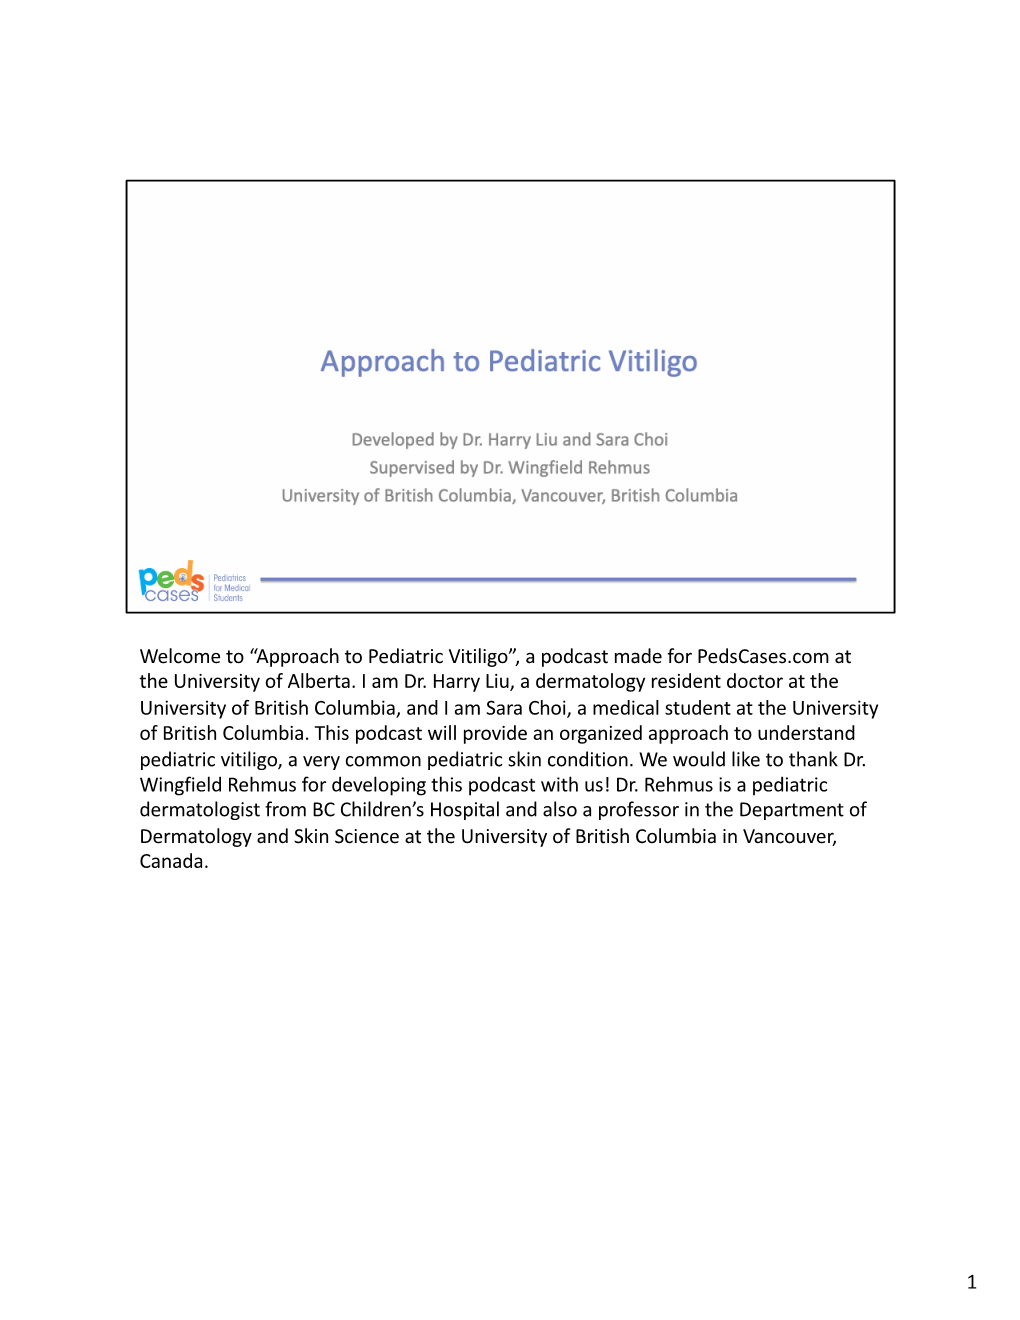 “Approach to Pediatric Vitiligo”, a Podcast Made for Pedscases.Com at the University of Alberta